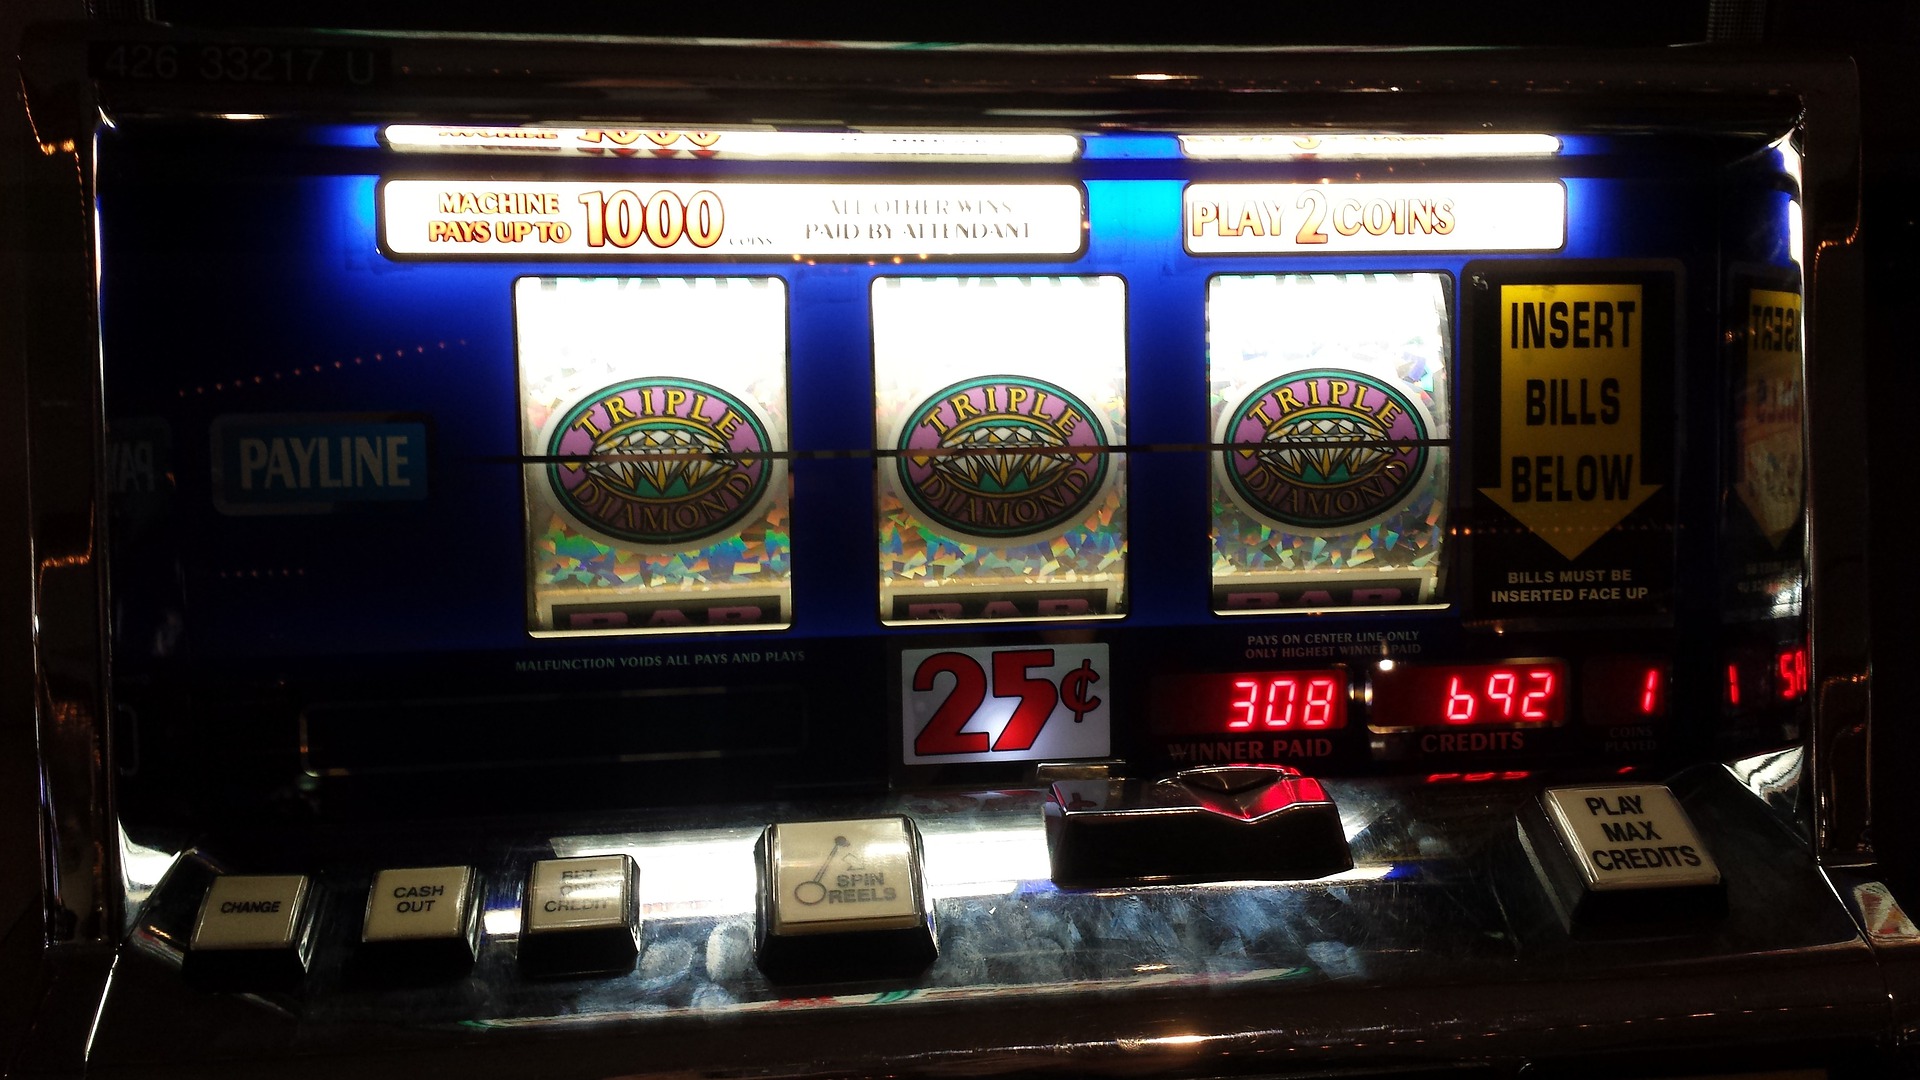 Bingo free slot machines